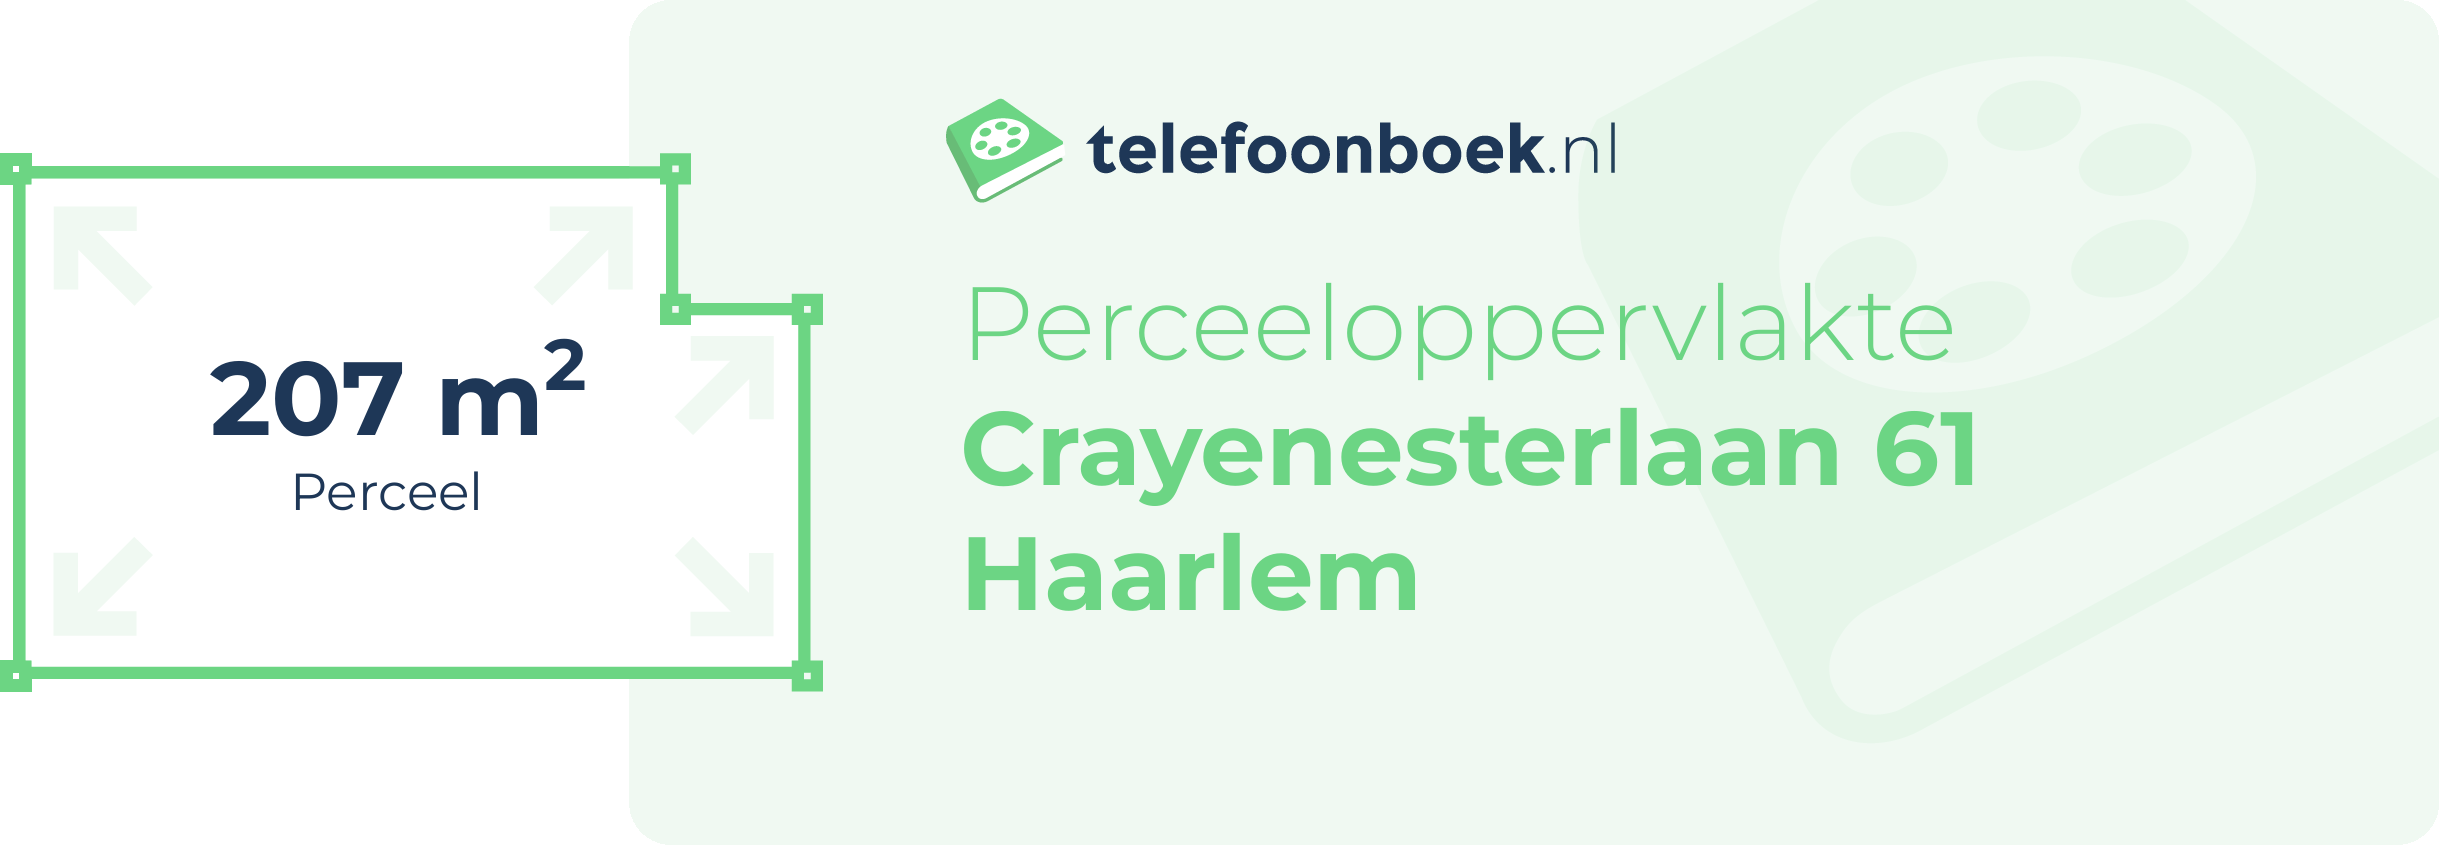 Perceeloppervlakte Crayenesterlaan 61 Haarlem